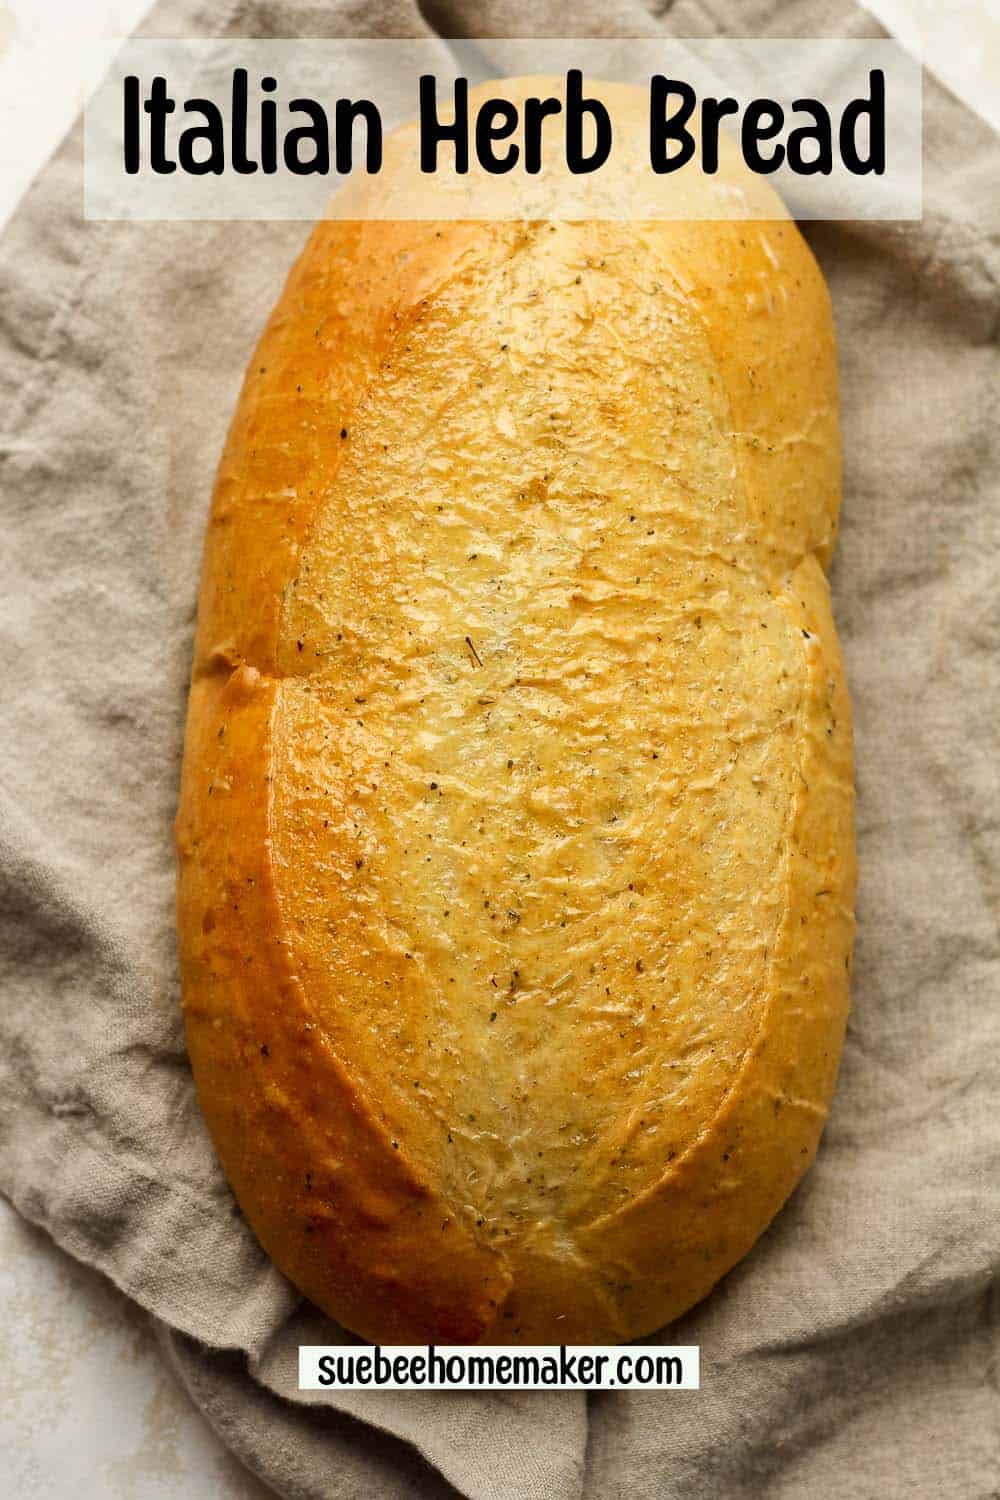 An oblong loaf of Italian herb bread.